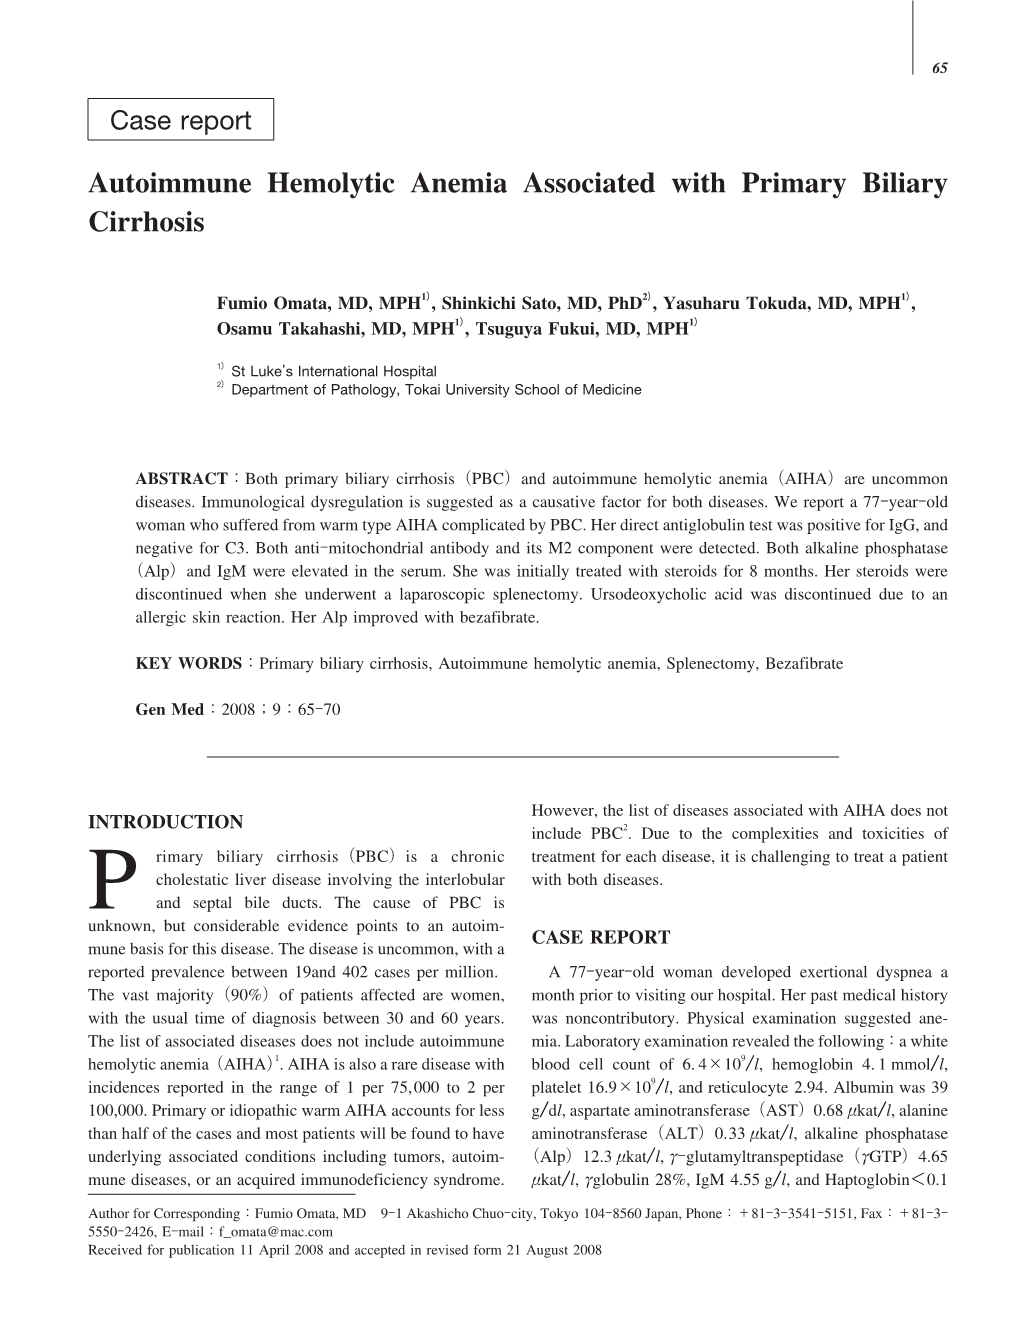 Autoimmune Hemolytic Anemia Associated with Primary Biliary Cirrhosis